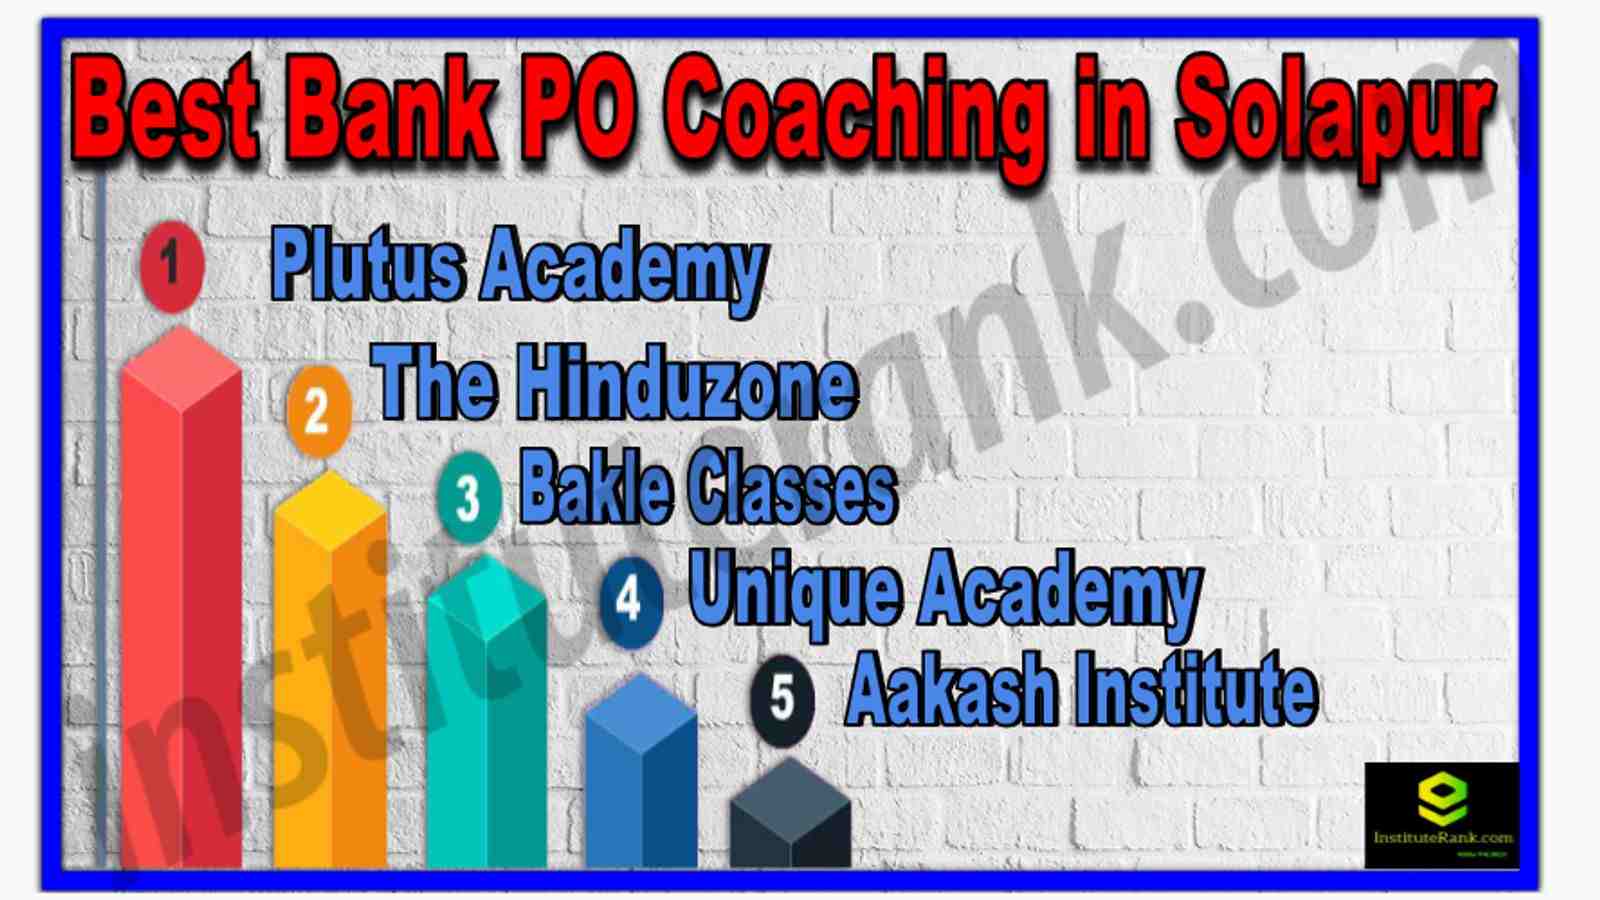 Best Bank PO Coaching in Solapur